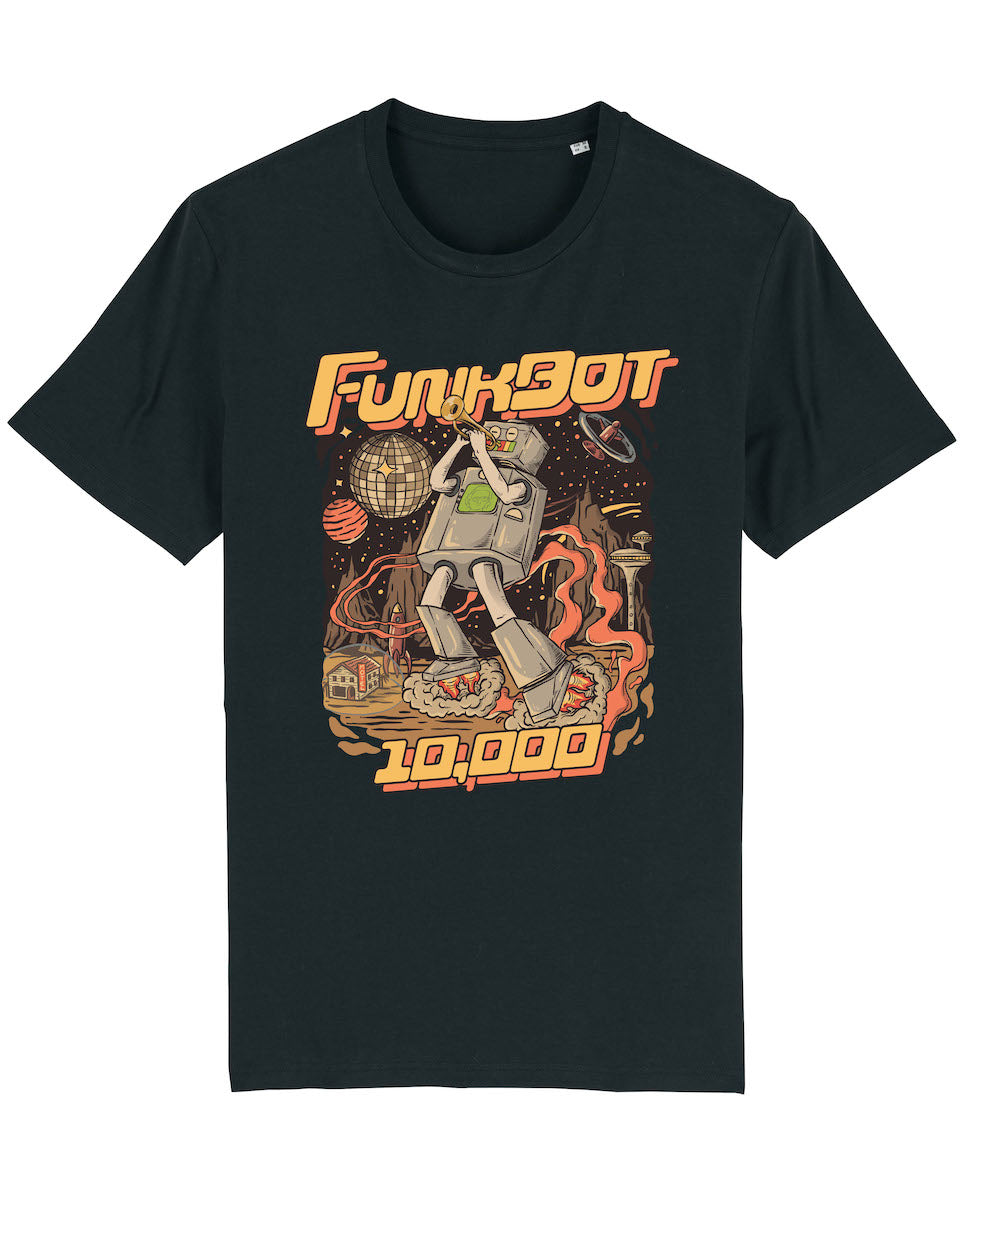 FunkBot T-Shirt (Black)